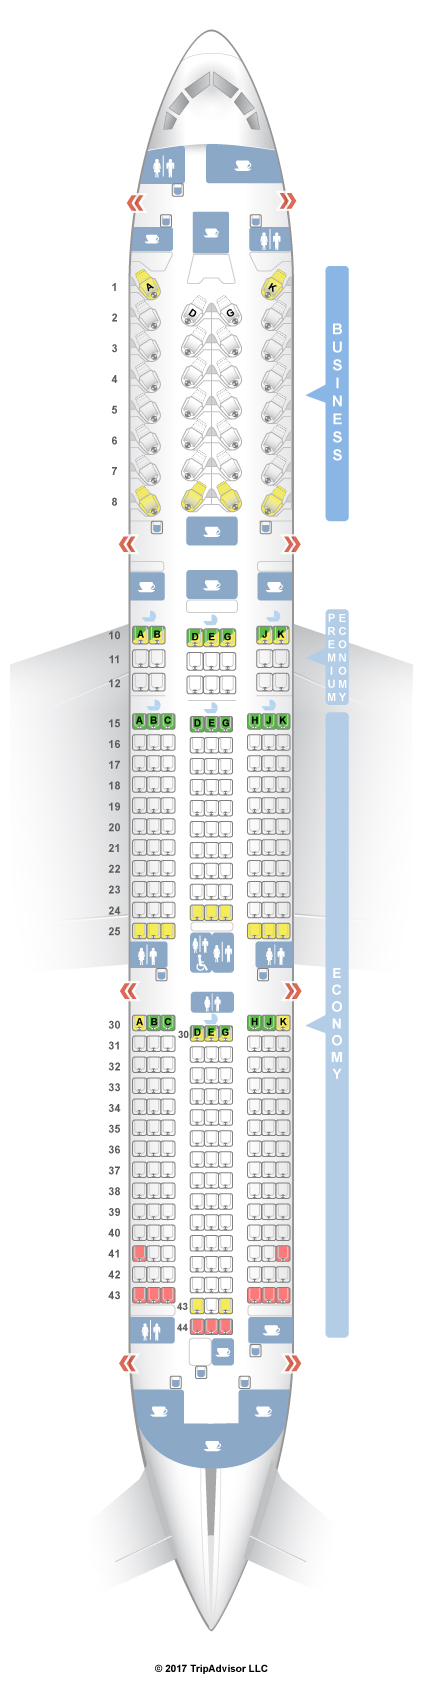 Seatguru Seat Map Air France Boeing 787 9 789